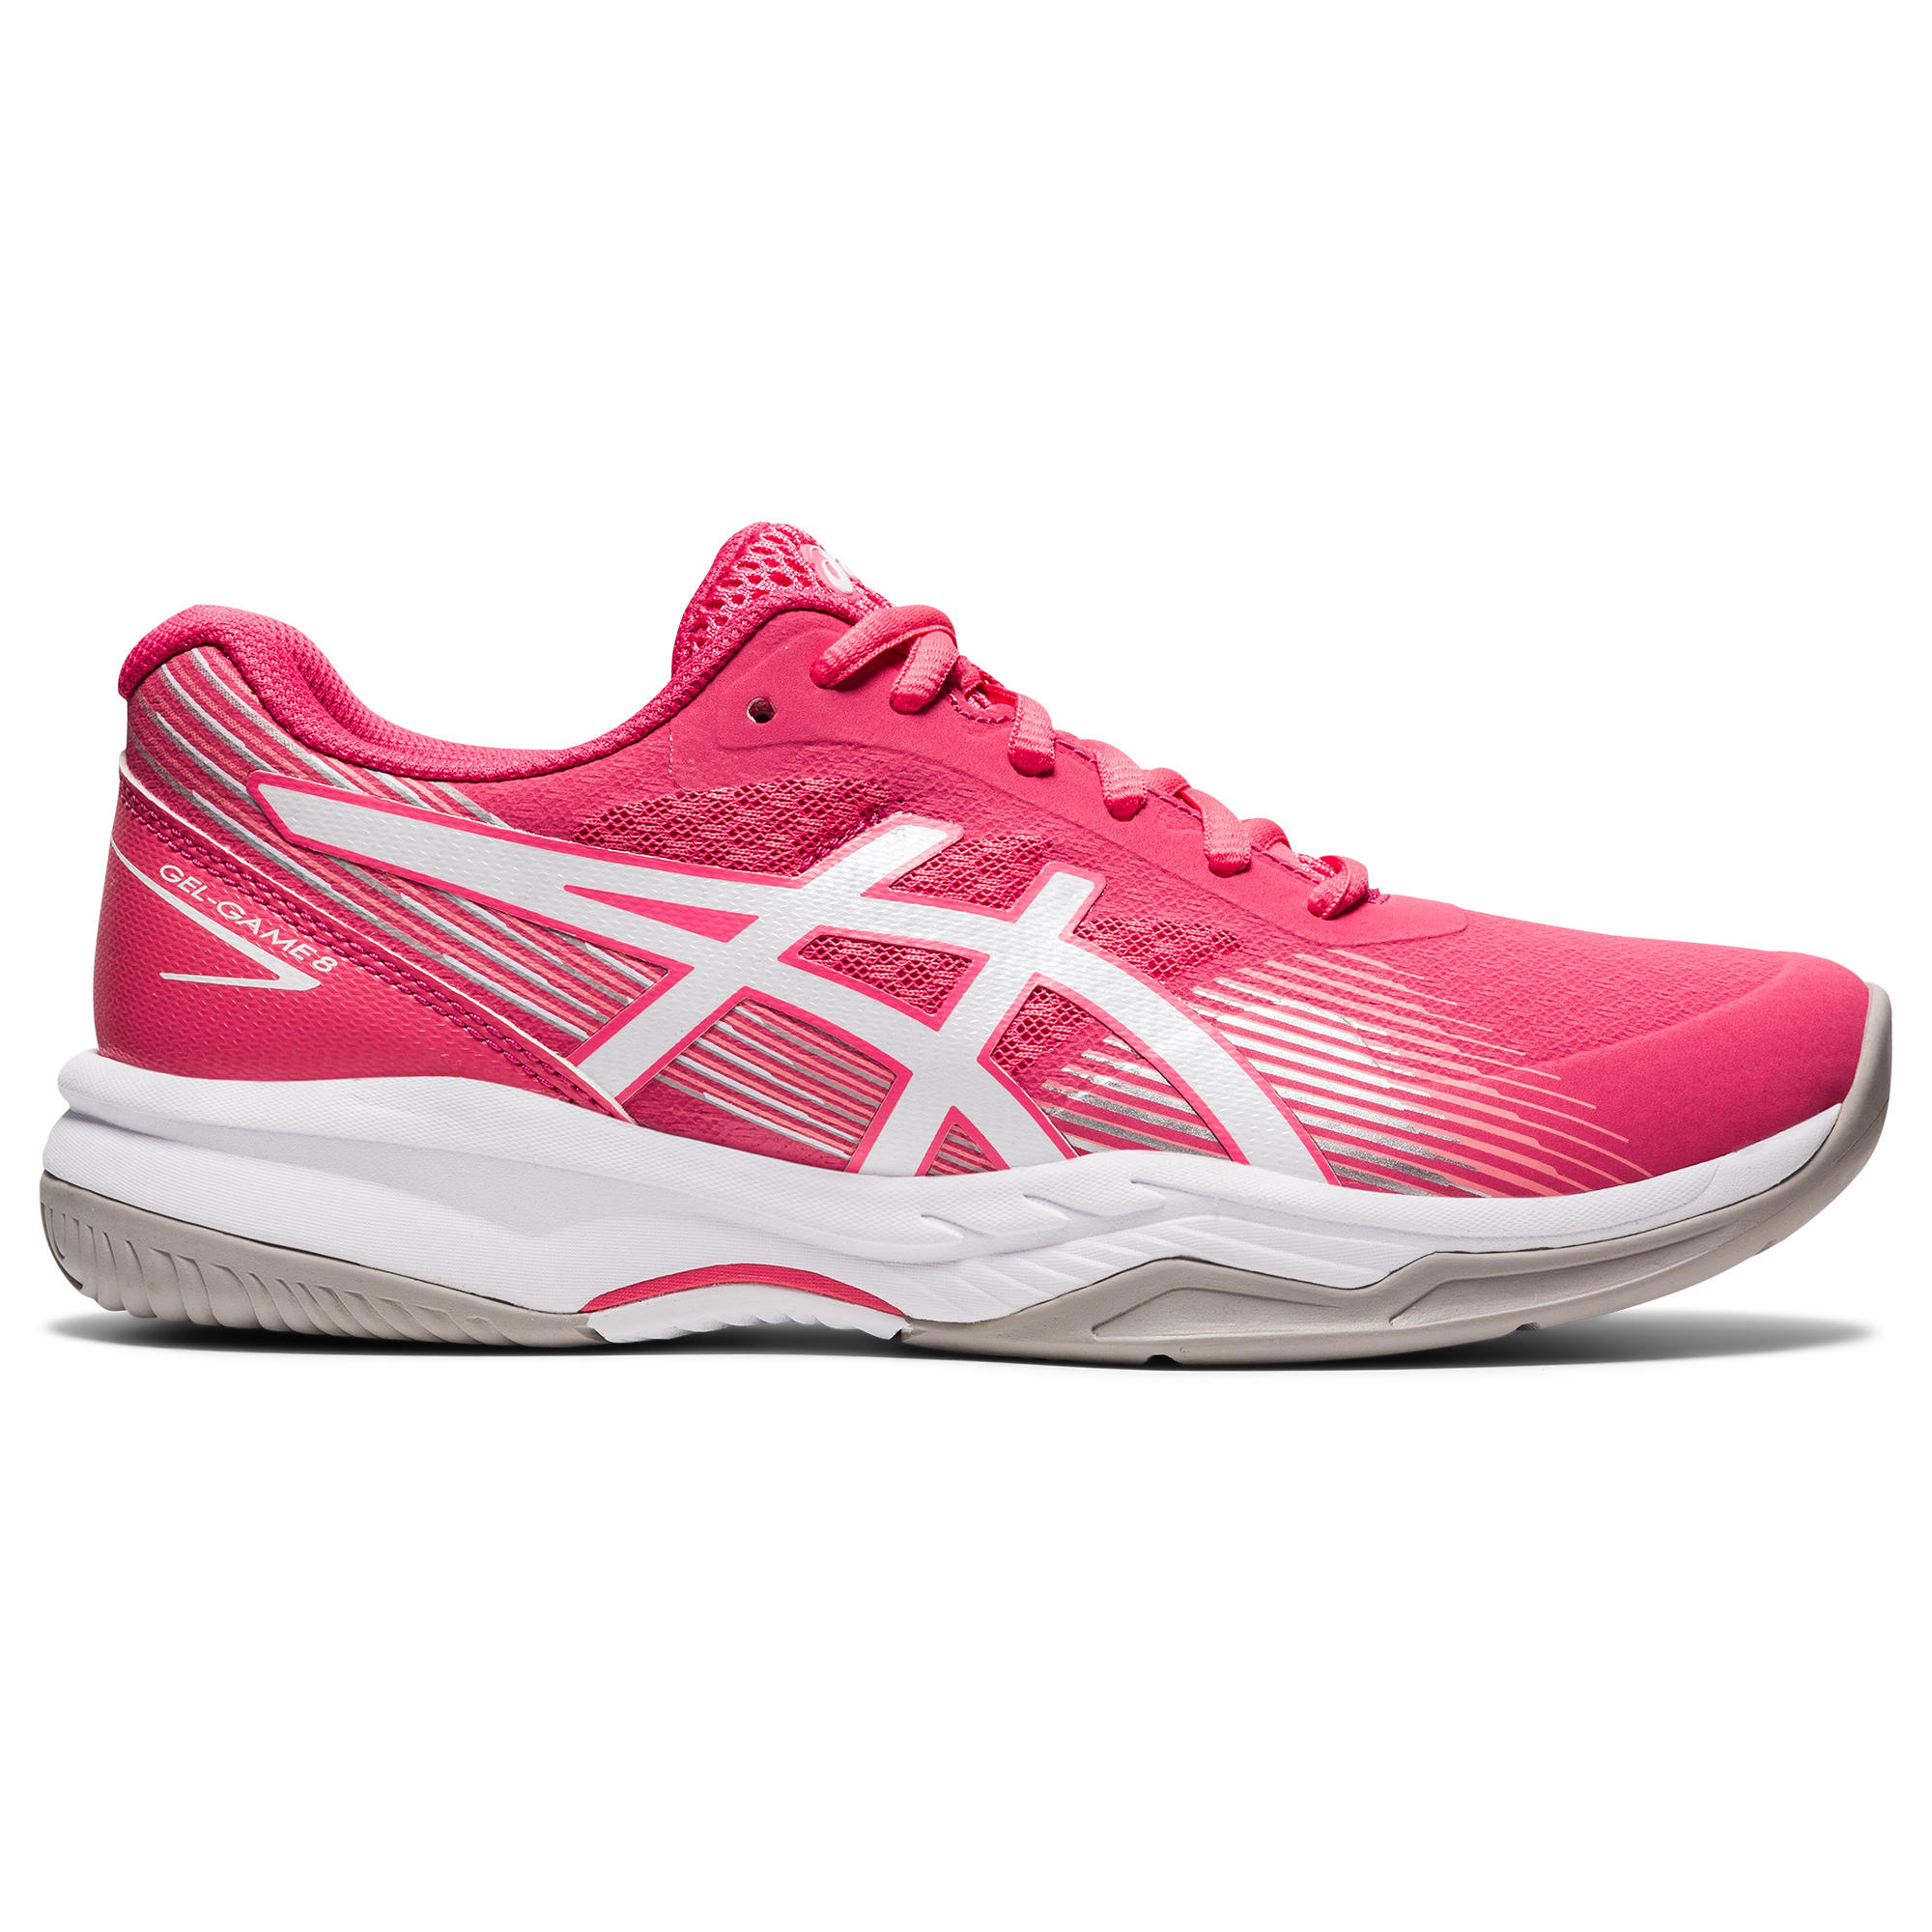 Women's Tennis Shoes Gel Game - Pink/White 1/7